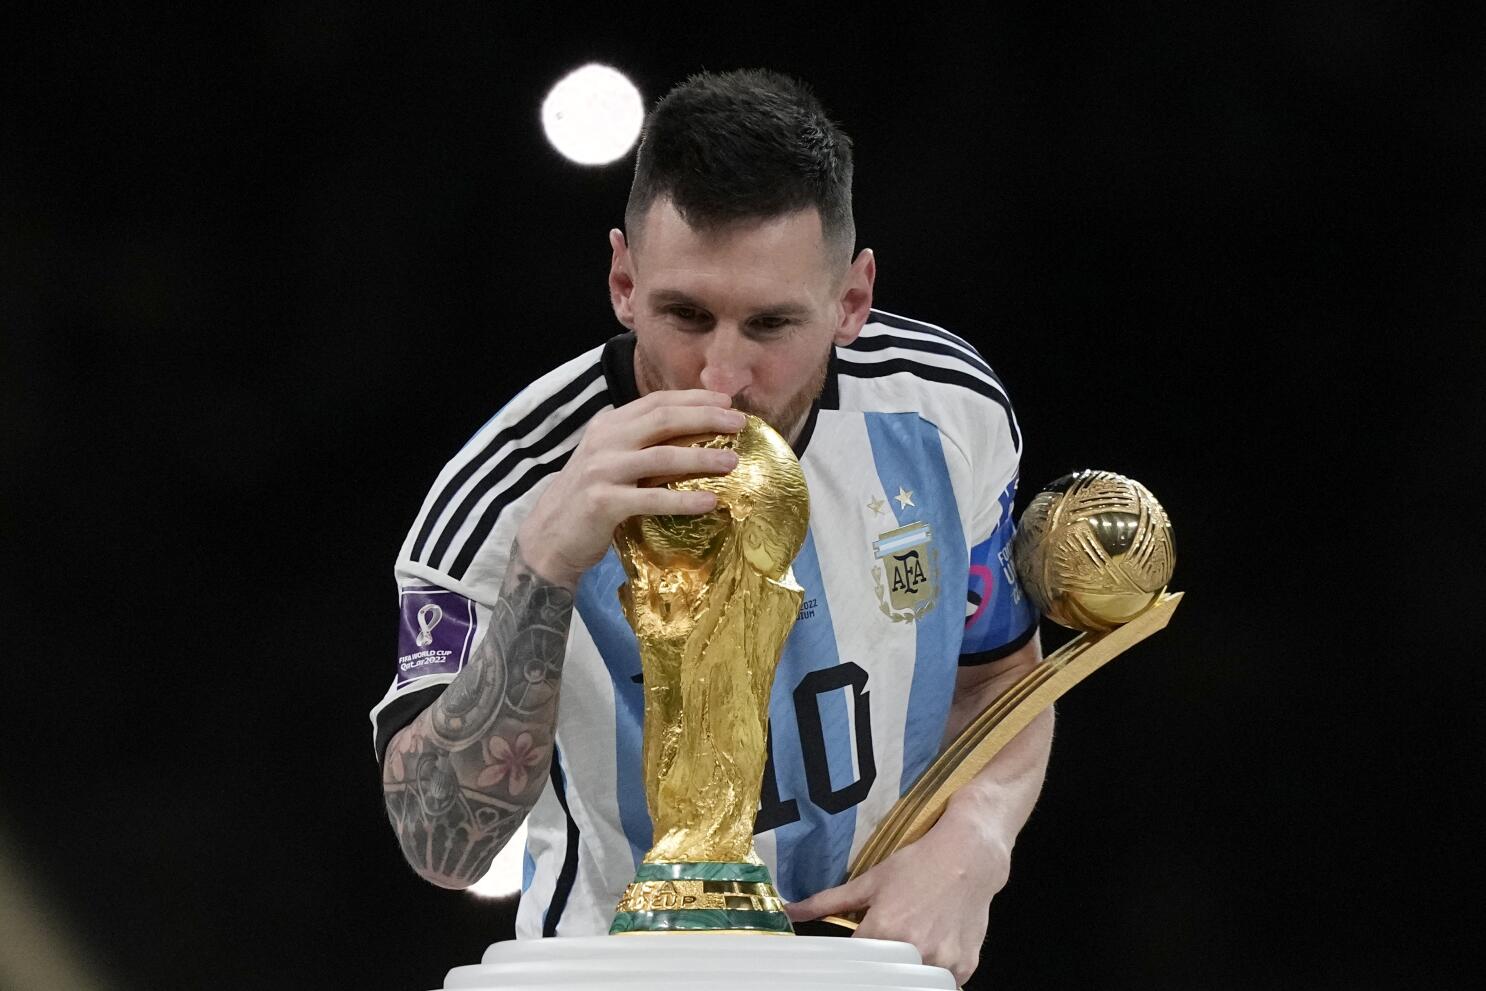 Messi descarta un sexto Mundial en 2026 - San Diego Union-Tribune en Español